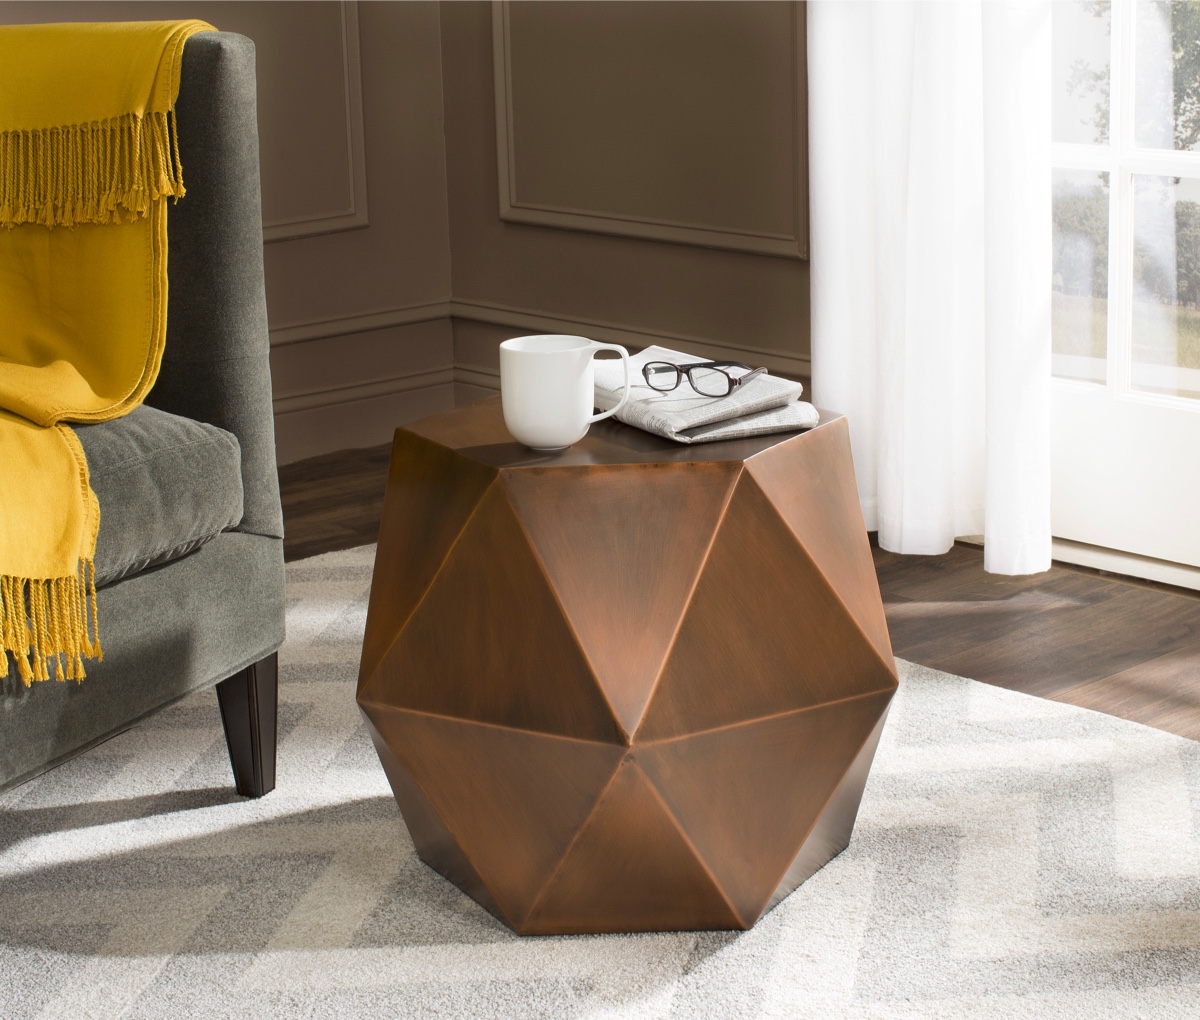 Classic Walnut Wood End  Side Table or Nightstand Classic Geometric Modern Mid Century Hardwood Furniture Design